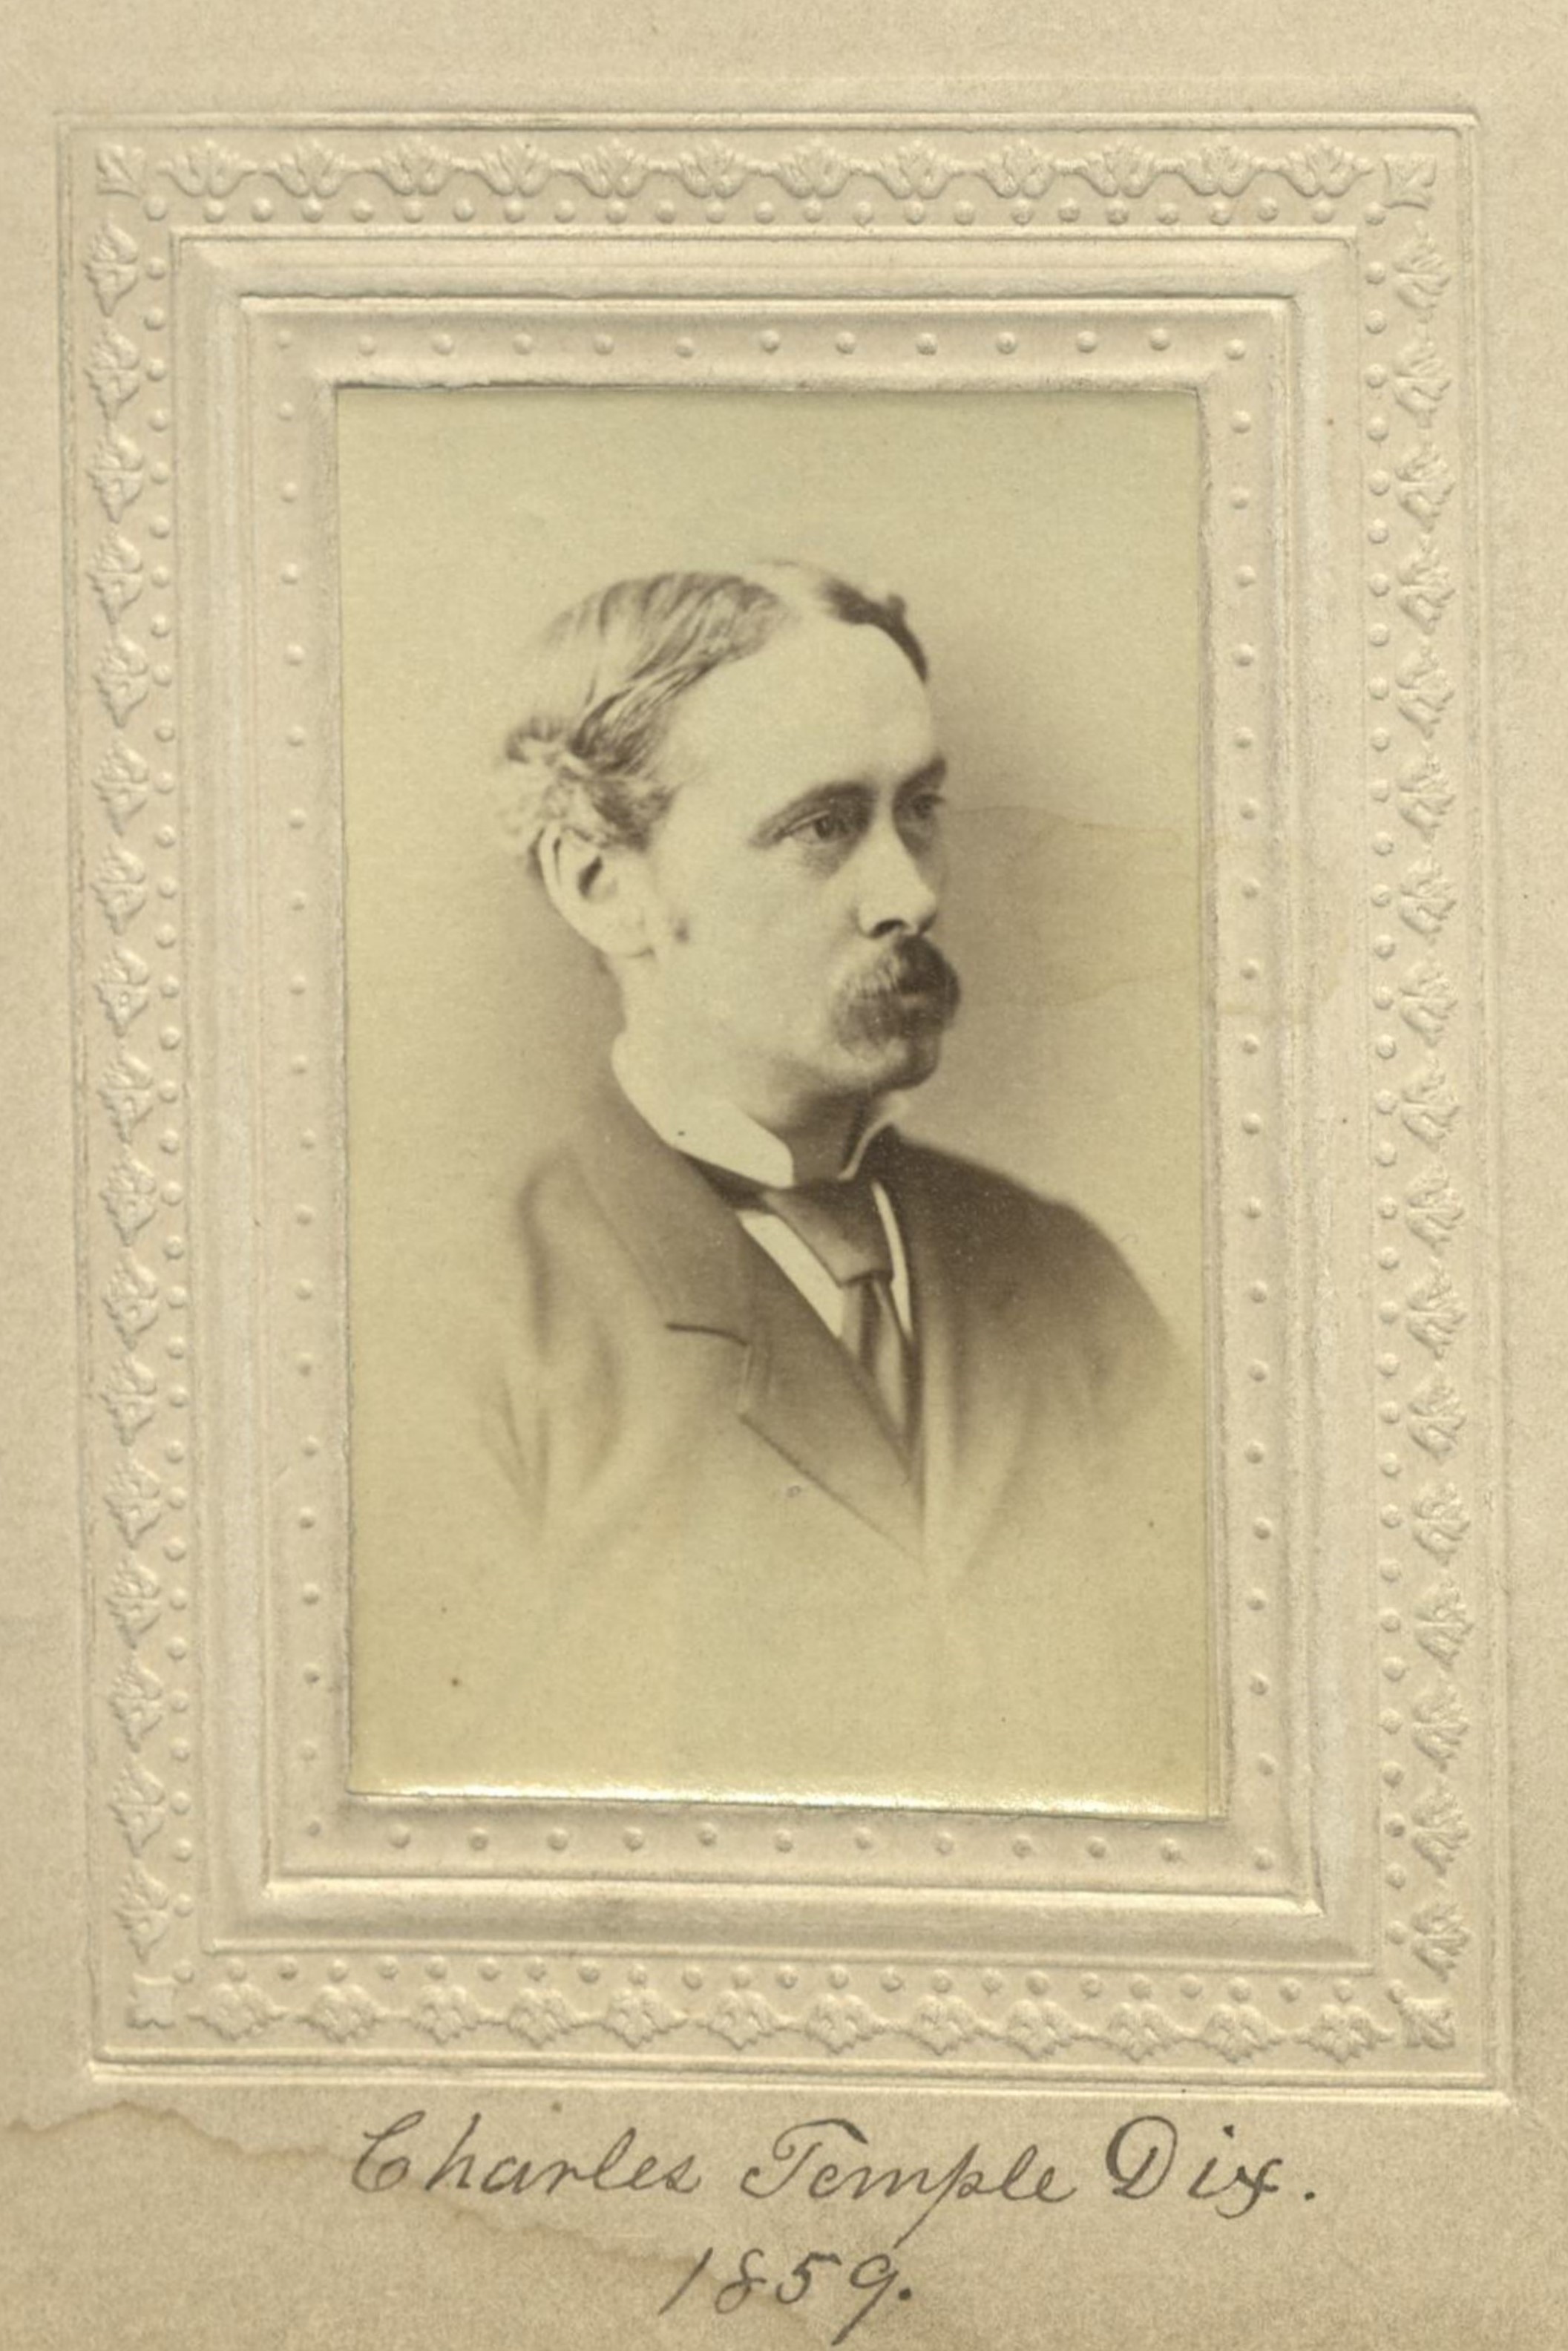 Member portrait of Charles Temple Dix